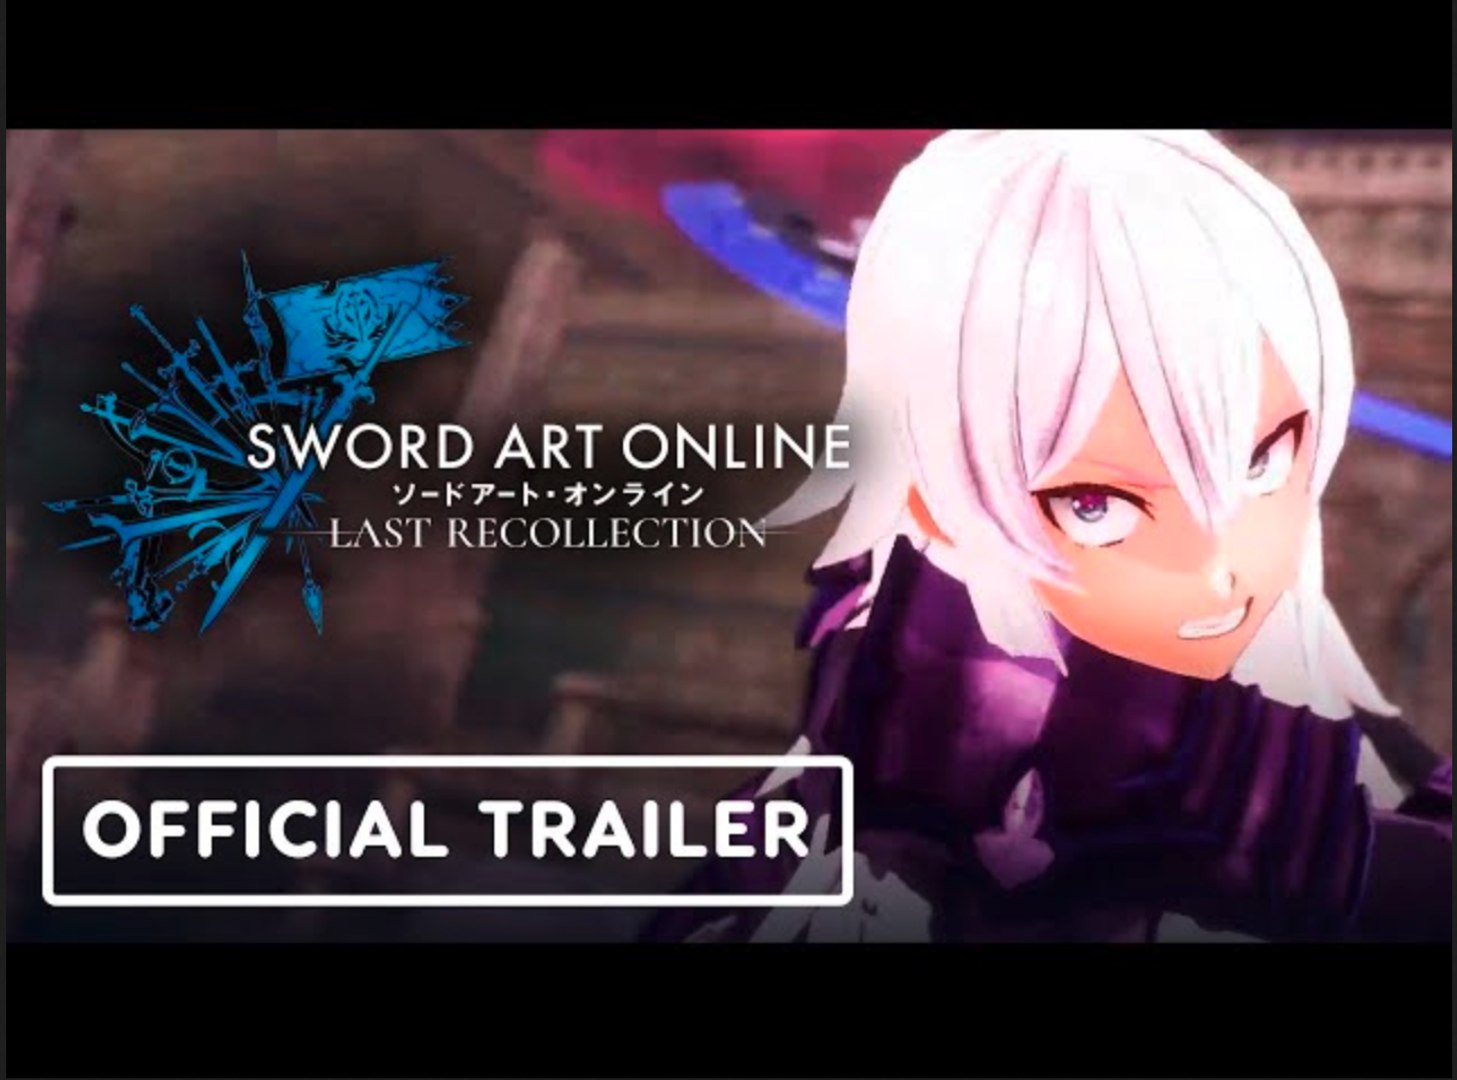 SWORD ART ONLINE: LAST RECOLLECTION - Announcement Trailer 